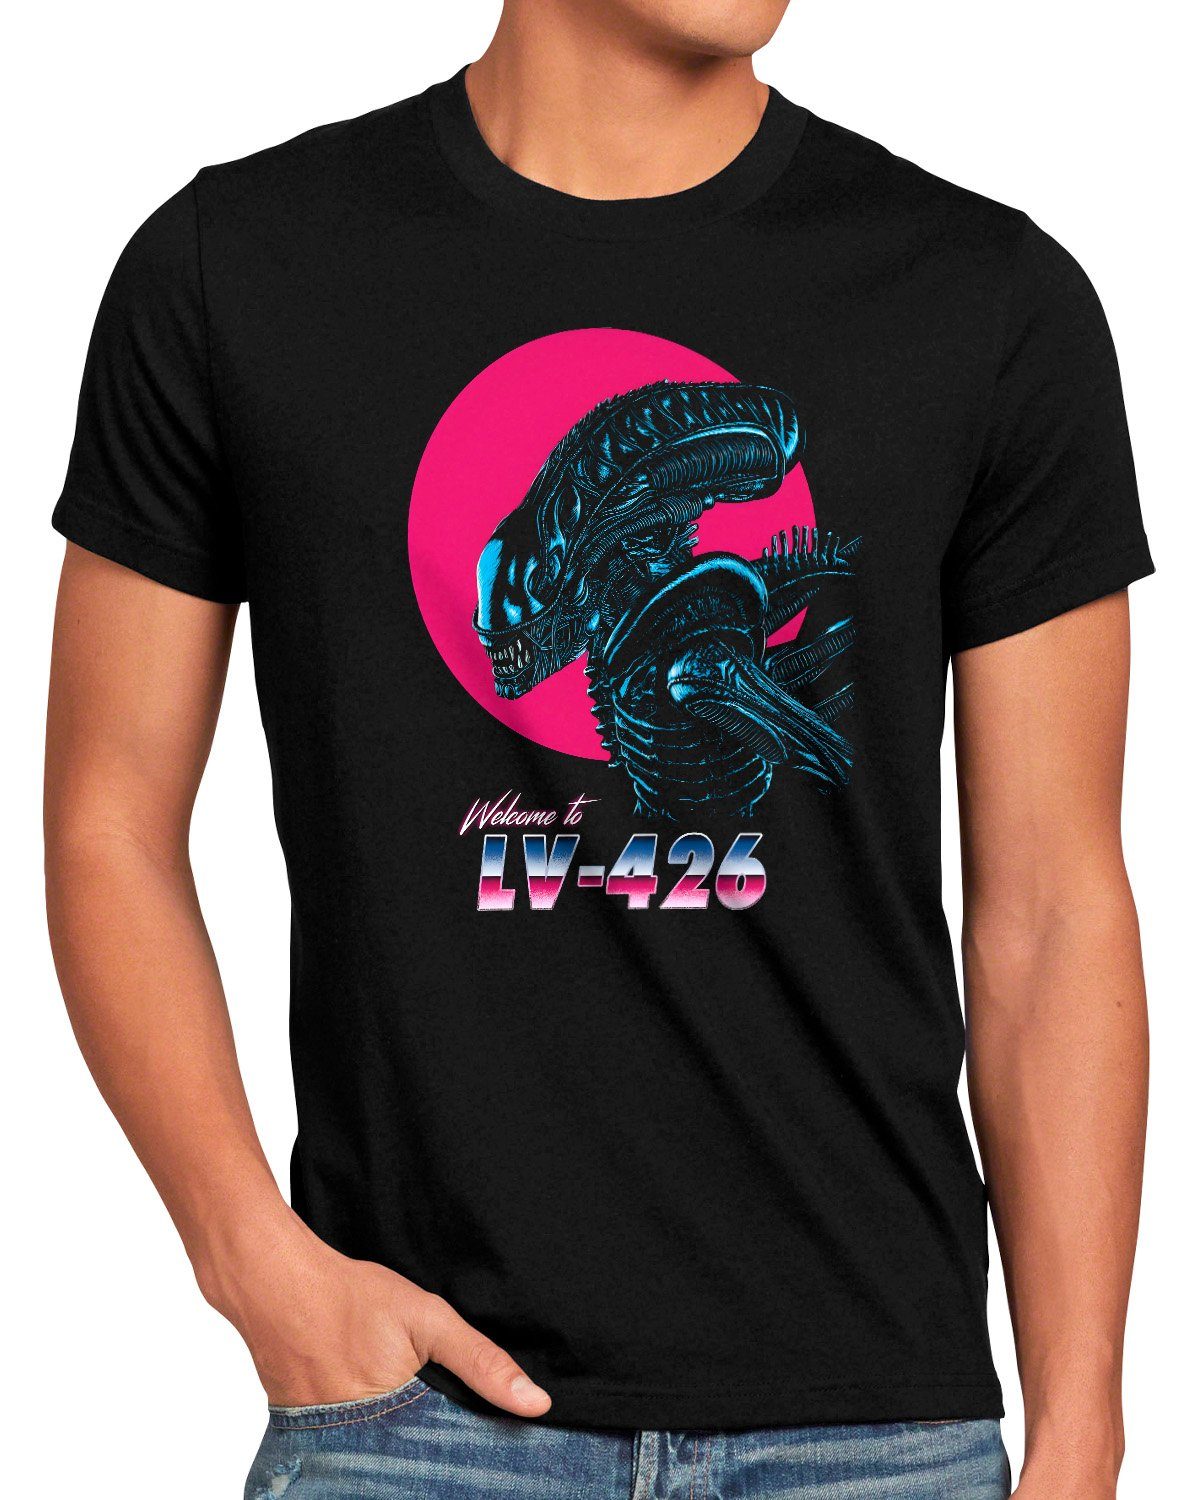 style3 Print-Shirt Herren T-Shirt Come to LV-426 xenomorph alien ridley scott predator